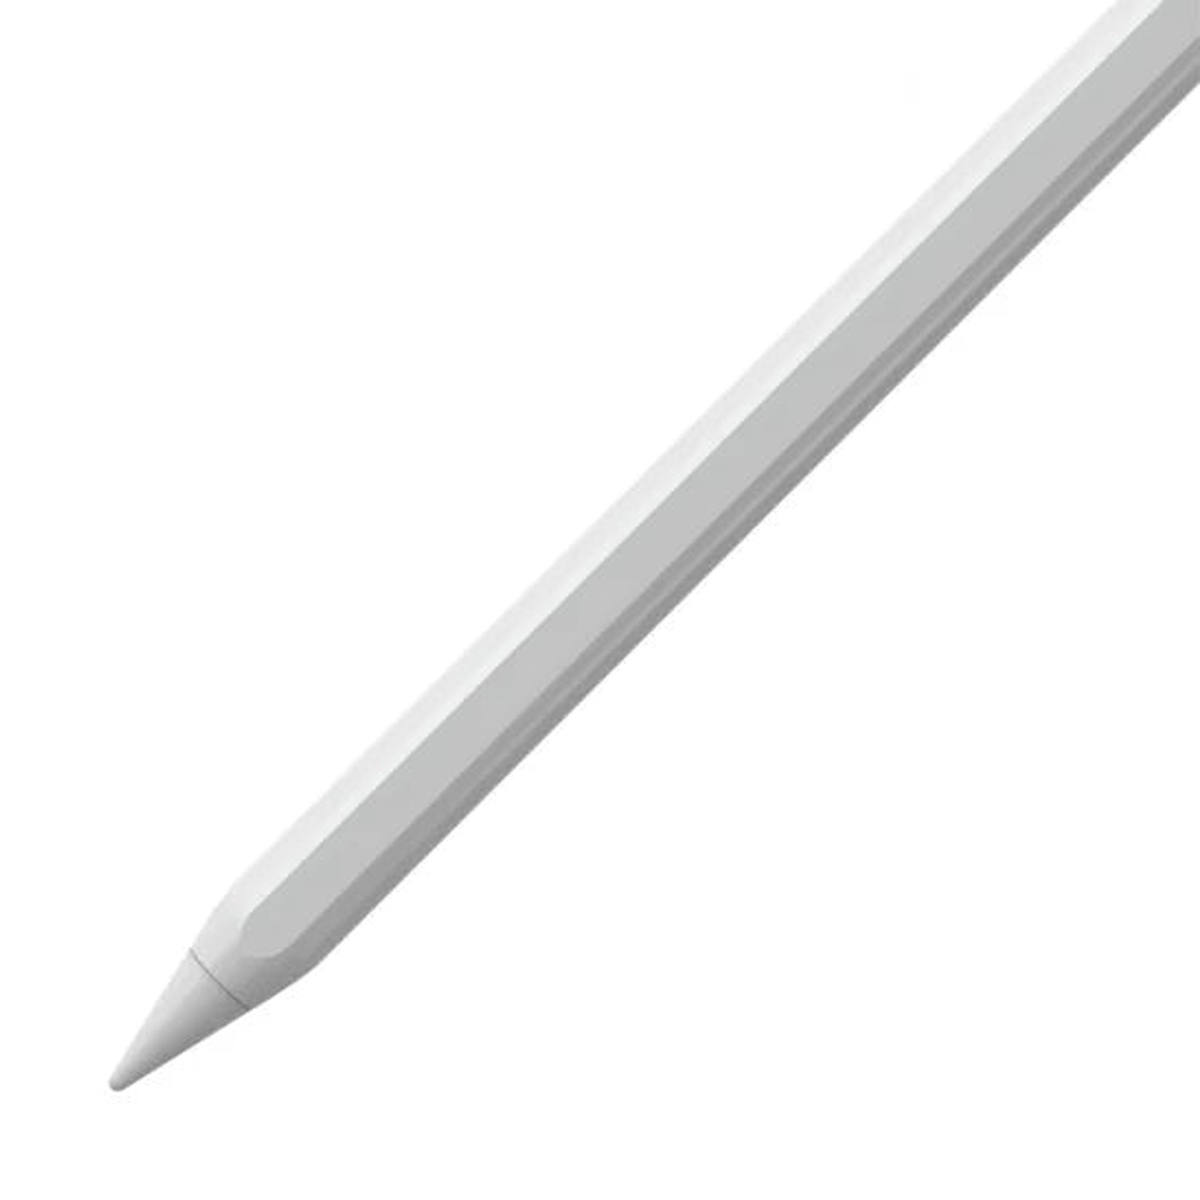 Smartix Premium Wireless Charging iPad Pencil, White, SM1BC96